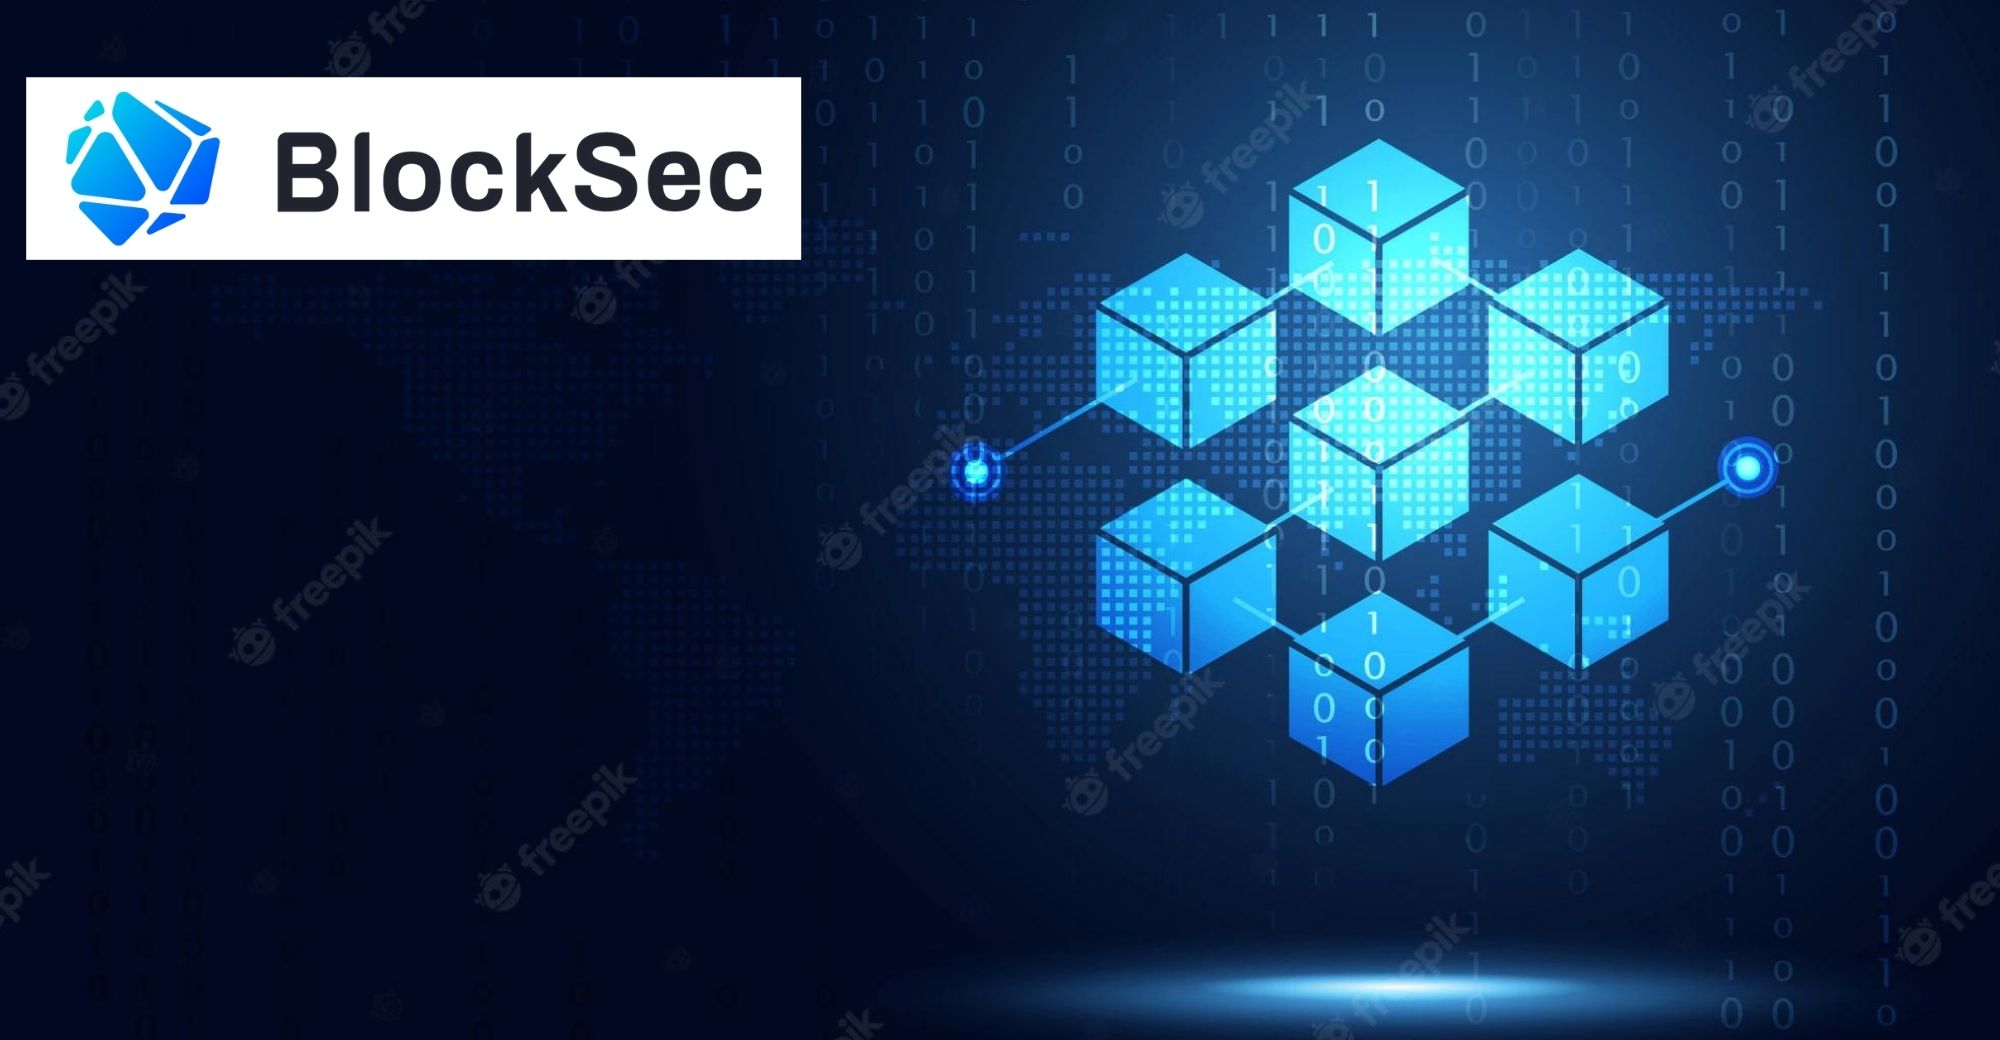 I-block ang chain architecture security enterprise BlockSec nakumpleto ang angel + round financing